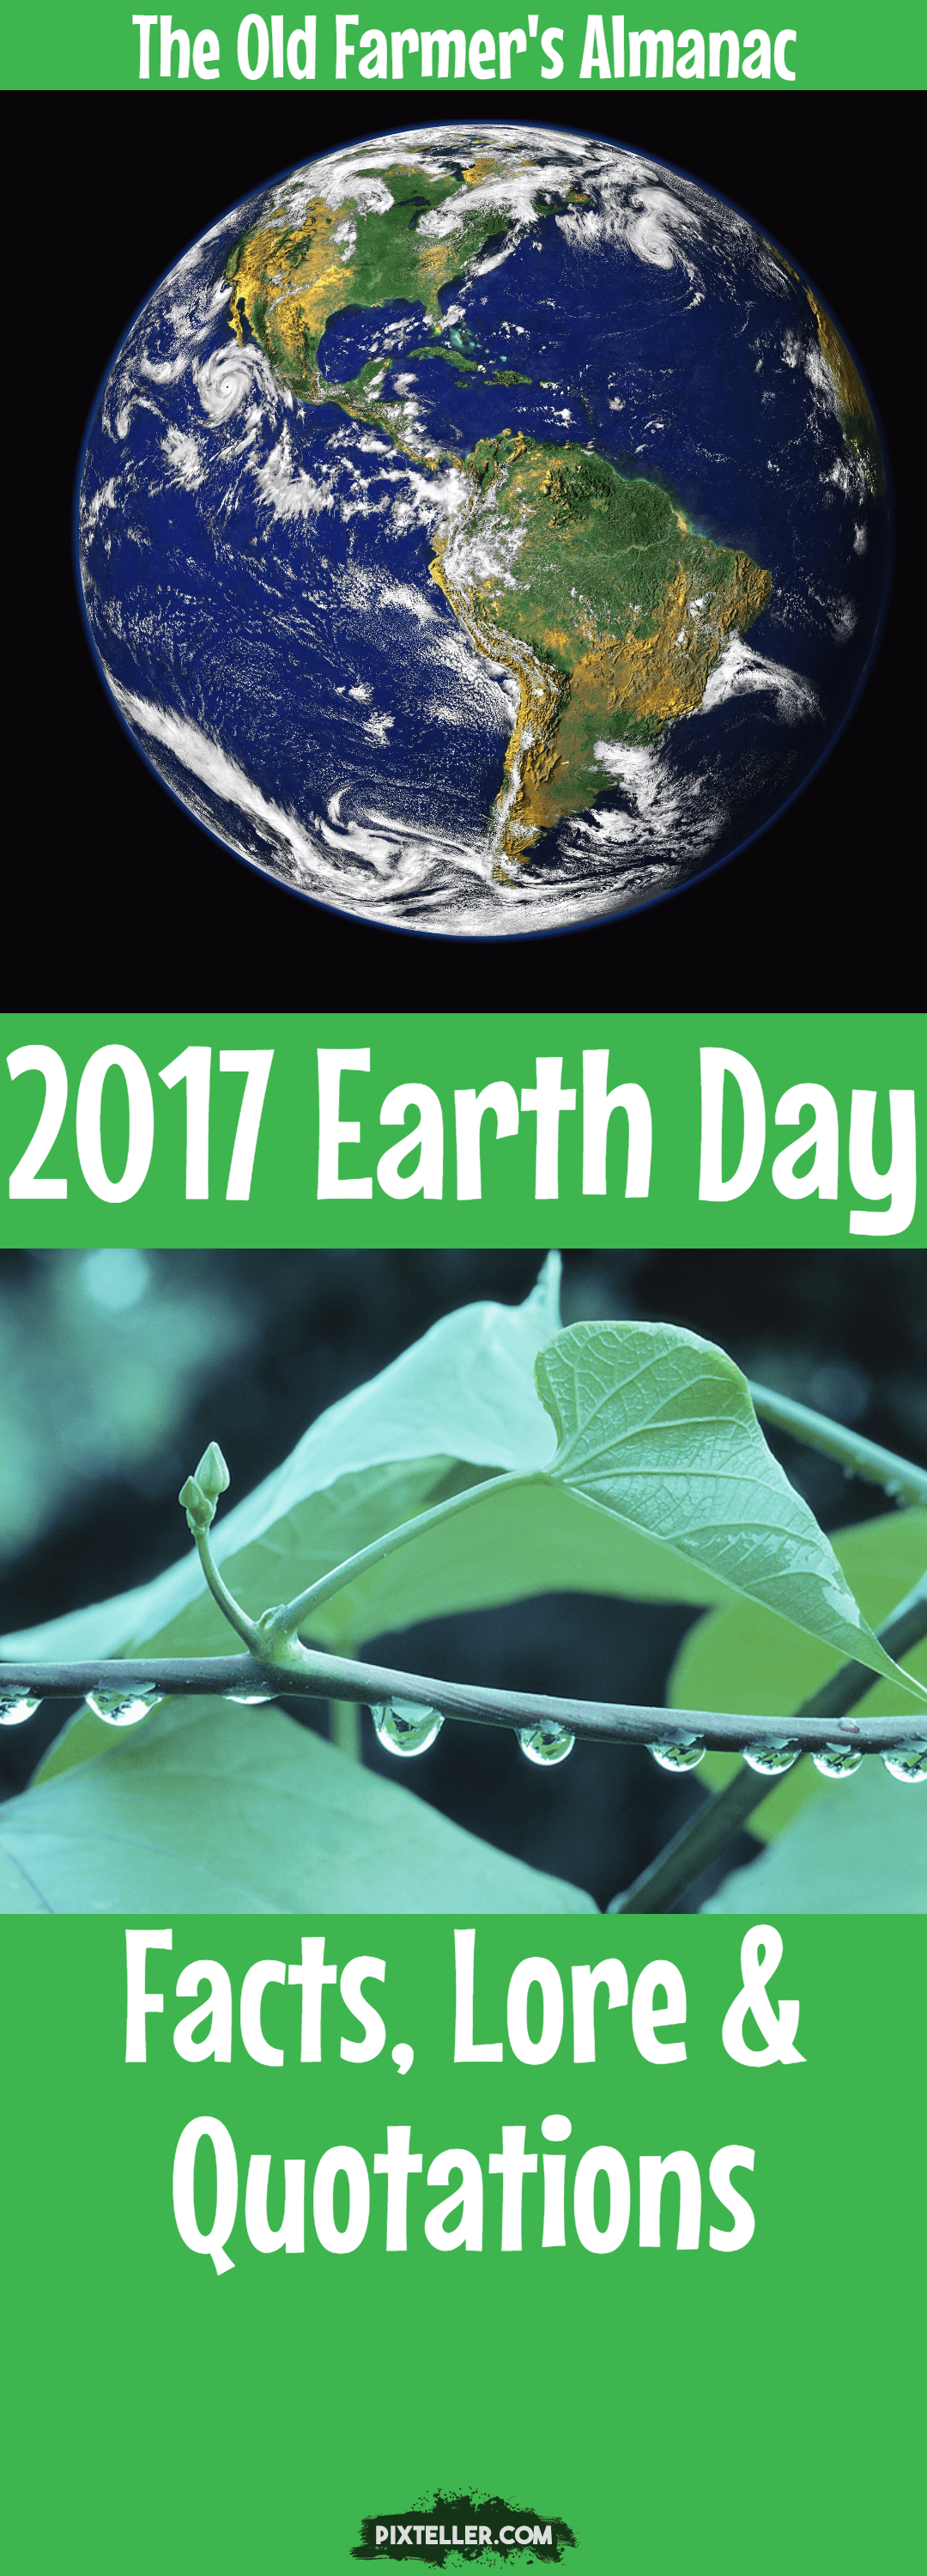 OFA 2-21-17 Earth Day Design 